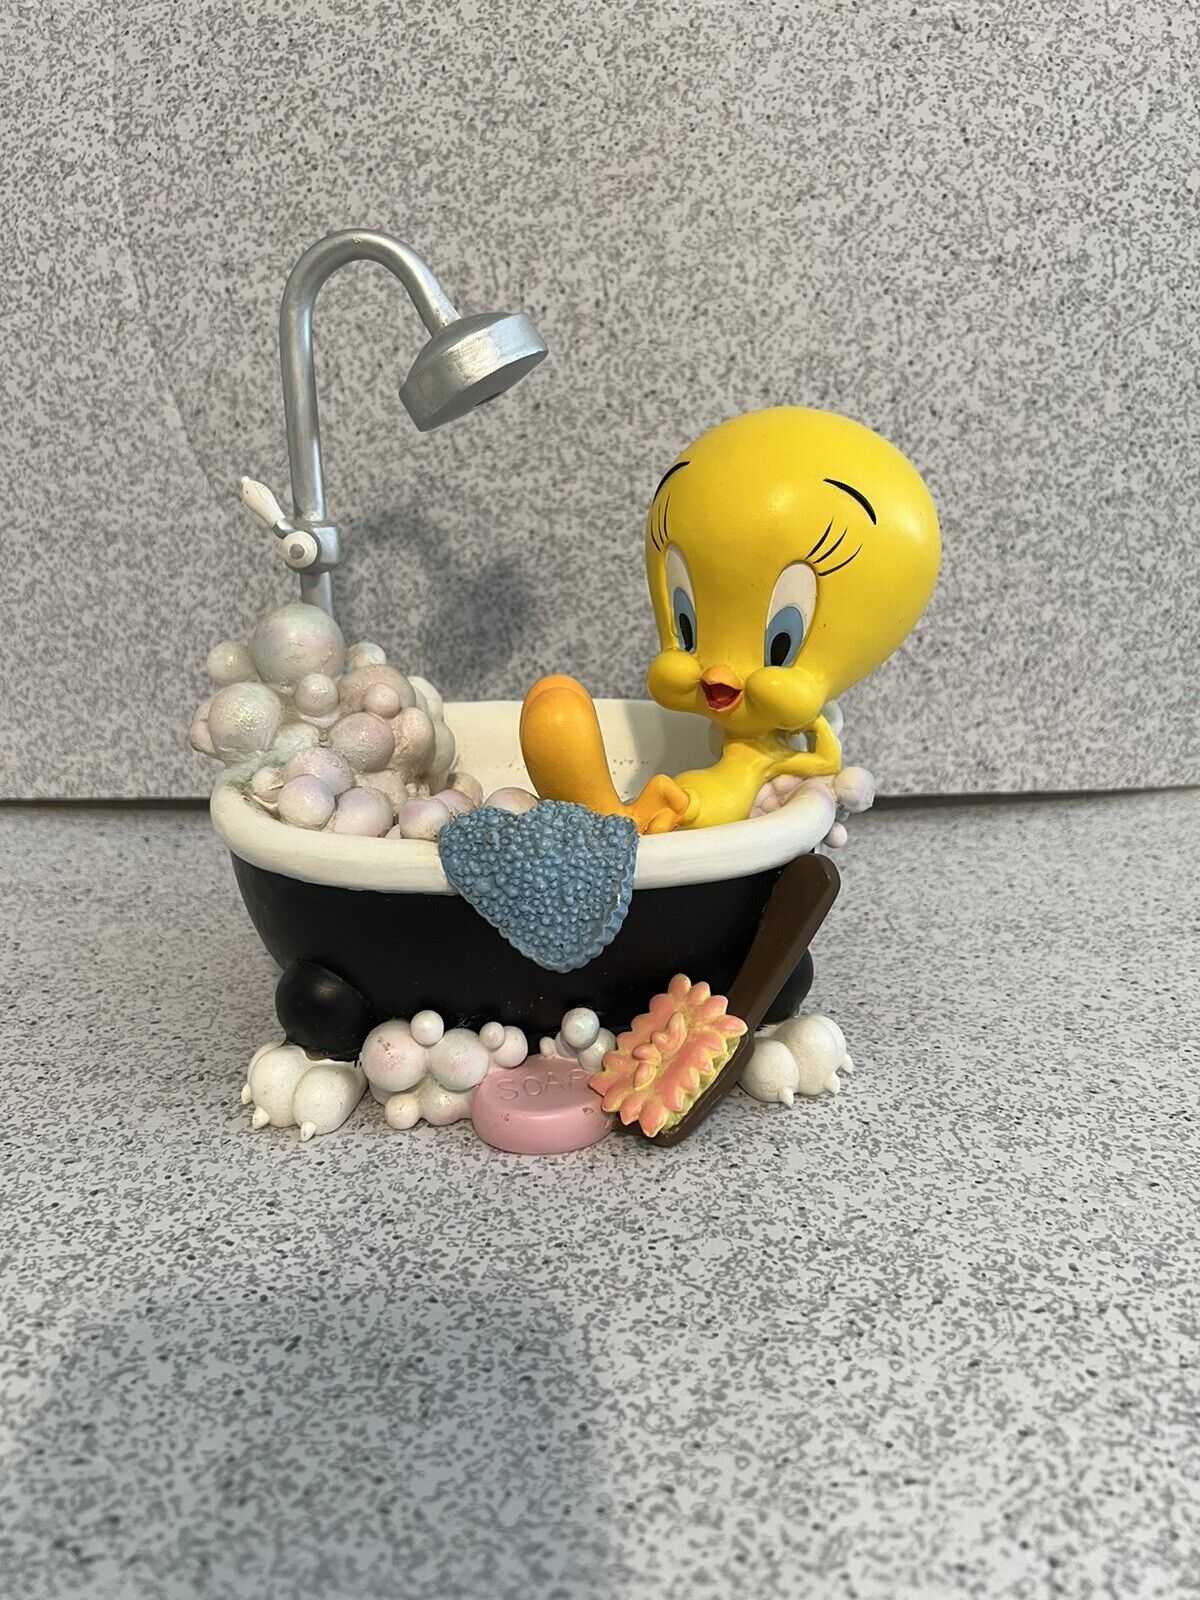 WARNER BROS TWEETY BIRD TAKING A BUBBLE BATH IN SYLVESTER TUB MUSIC BOX FOUNTAIN